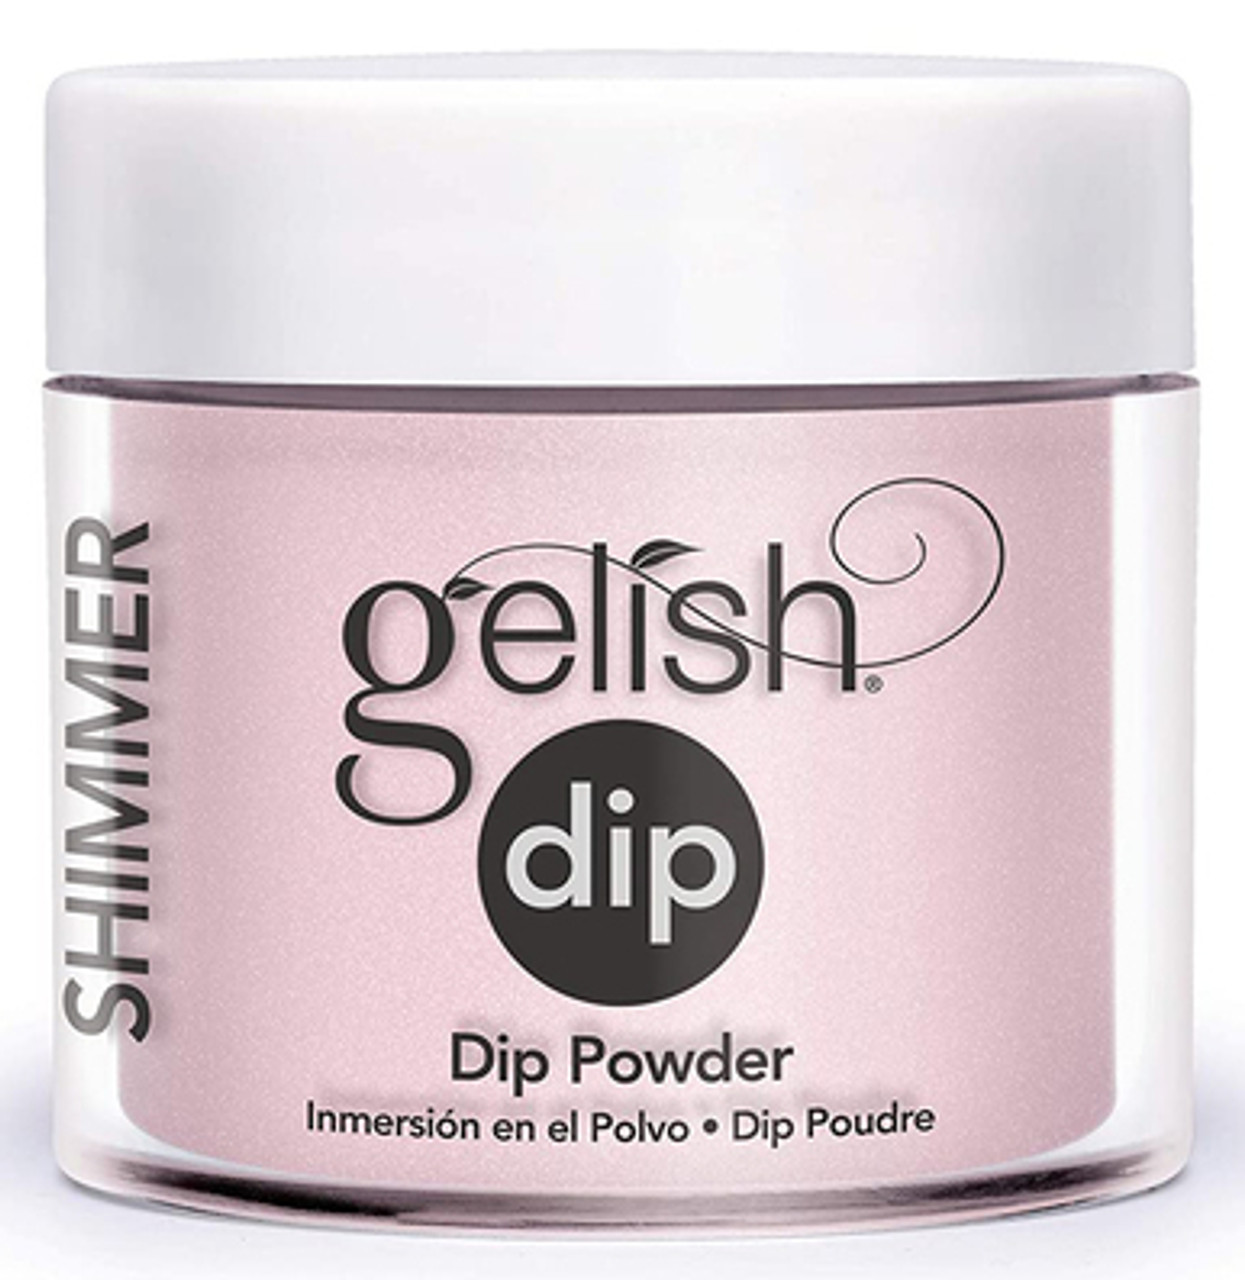 Gelish Dip Powder Taffeta - 0.8 oz / 23 g